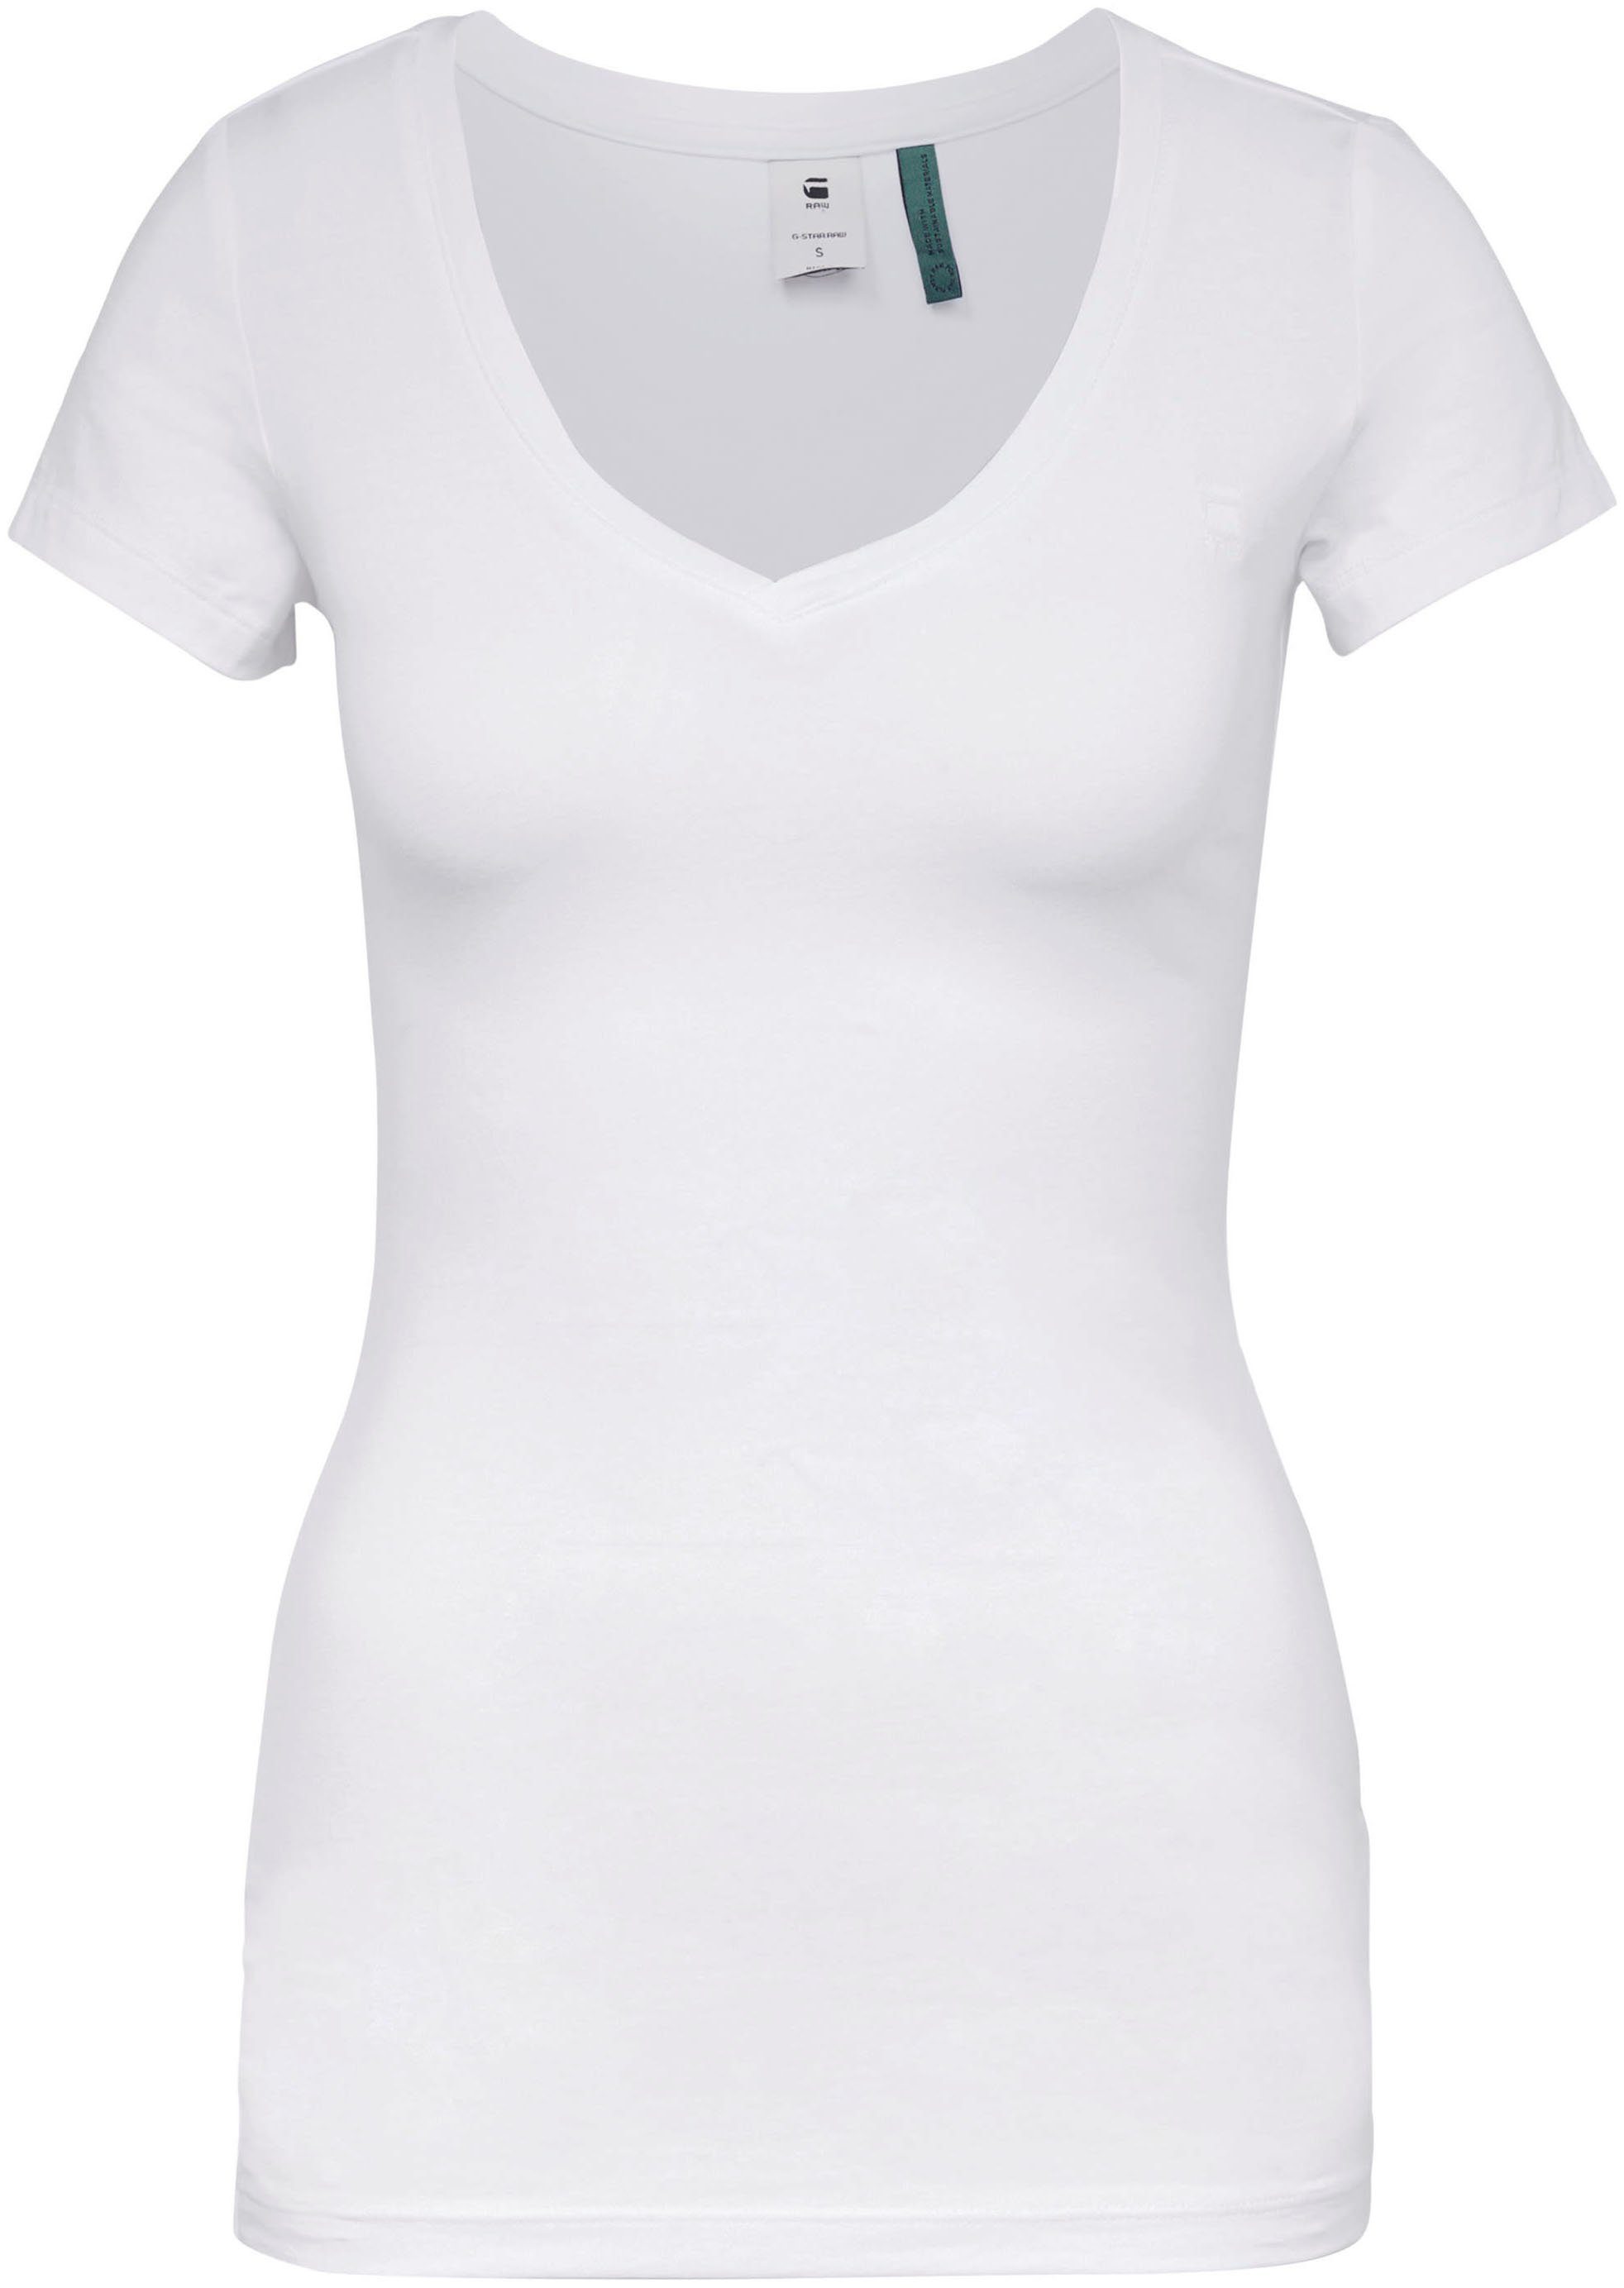 G-Star RAW V-Shirt Logodruck t Base v white wmn cap mit kleinem sl vorne